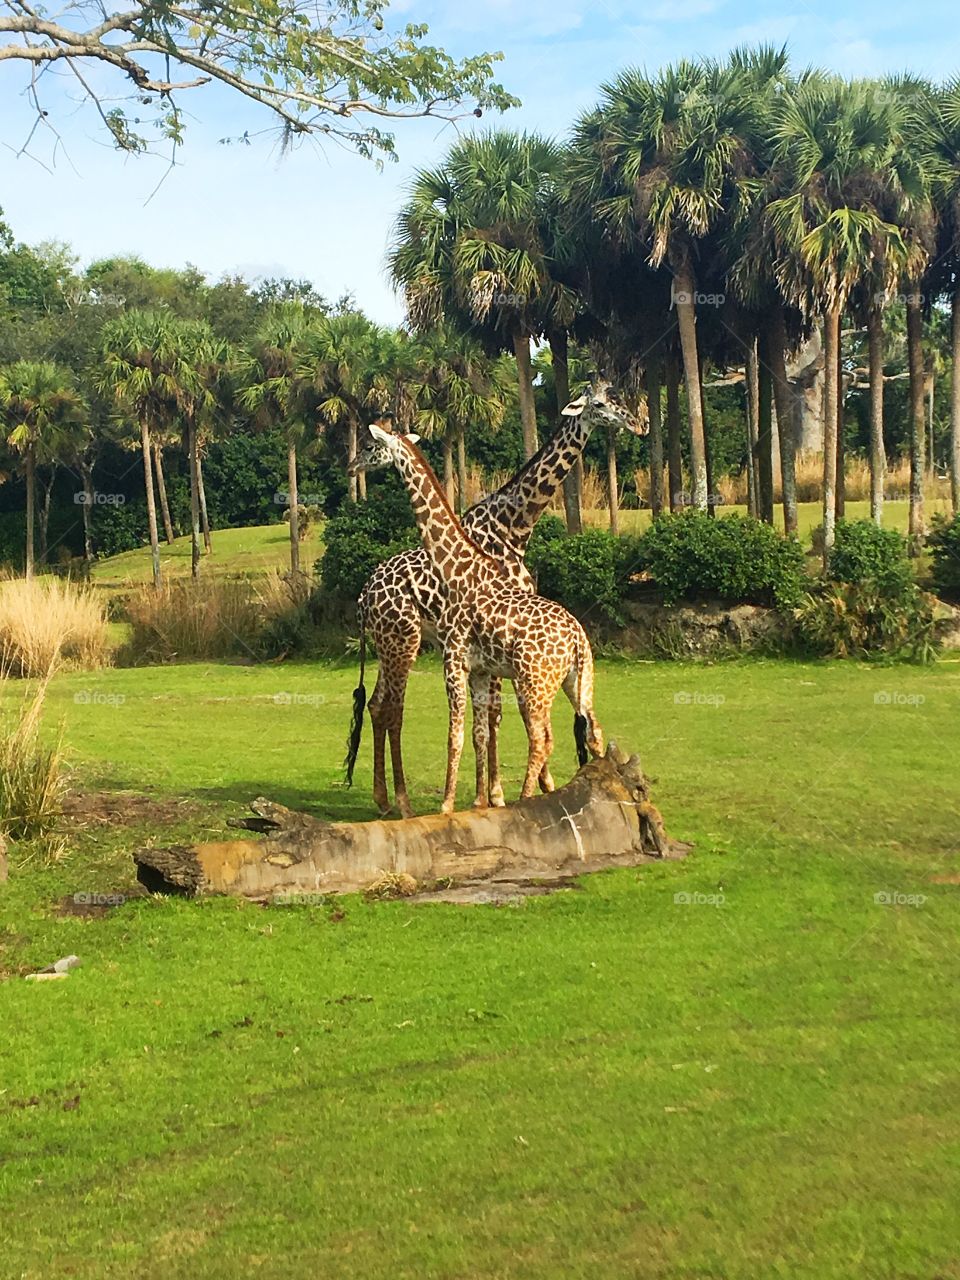 An older male Masai giraffe teaches a younger male Masai giraffe how to fight in a clearing 